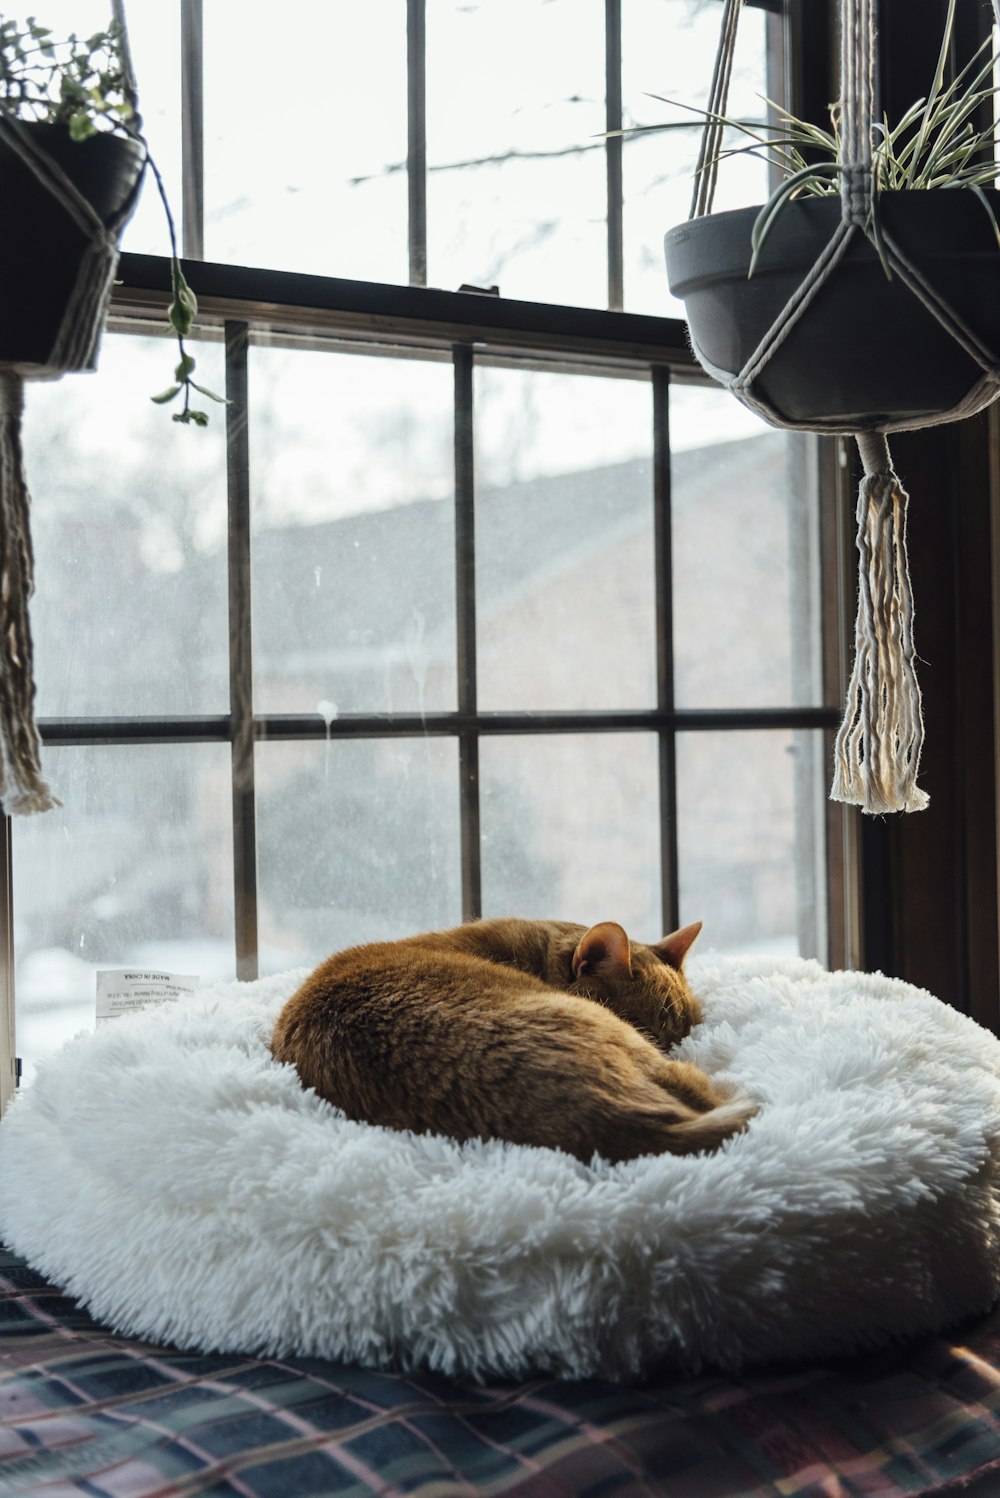 orange tabby cat lying on white textile